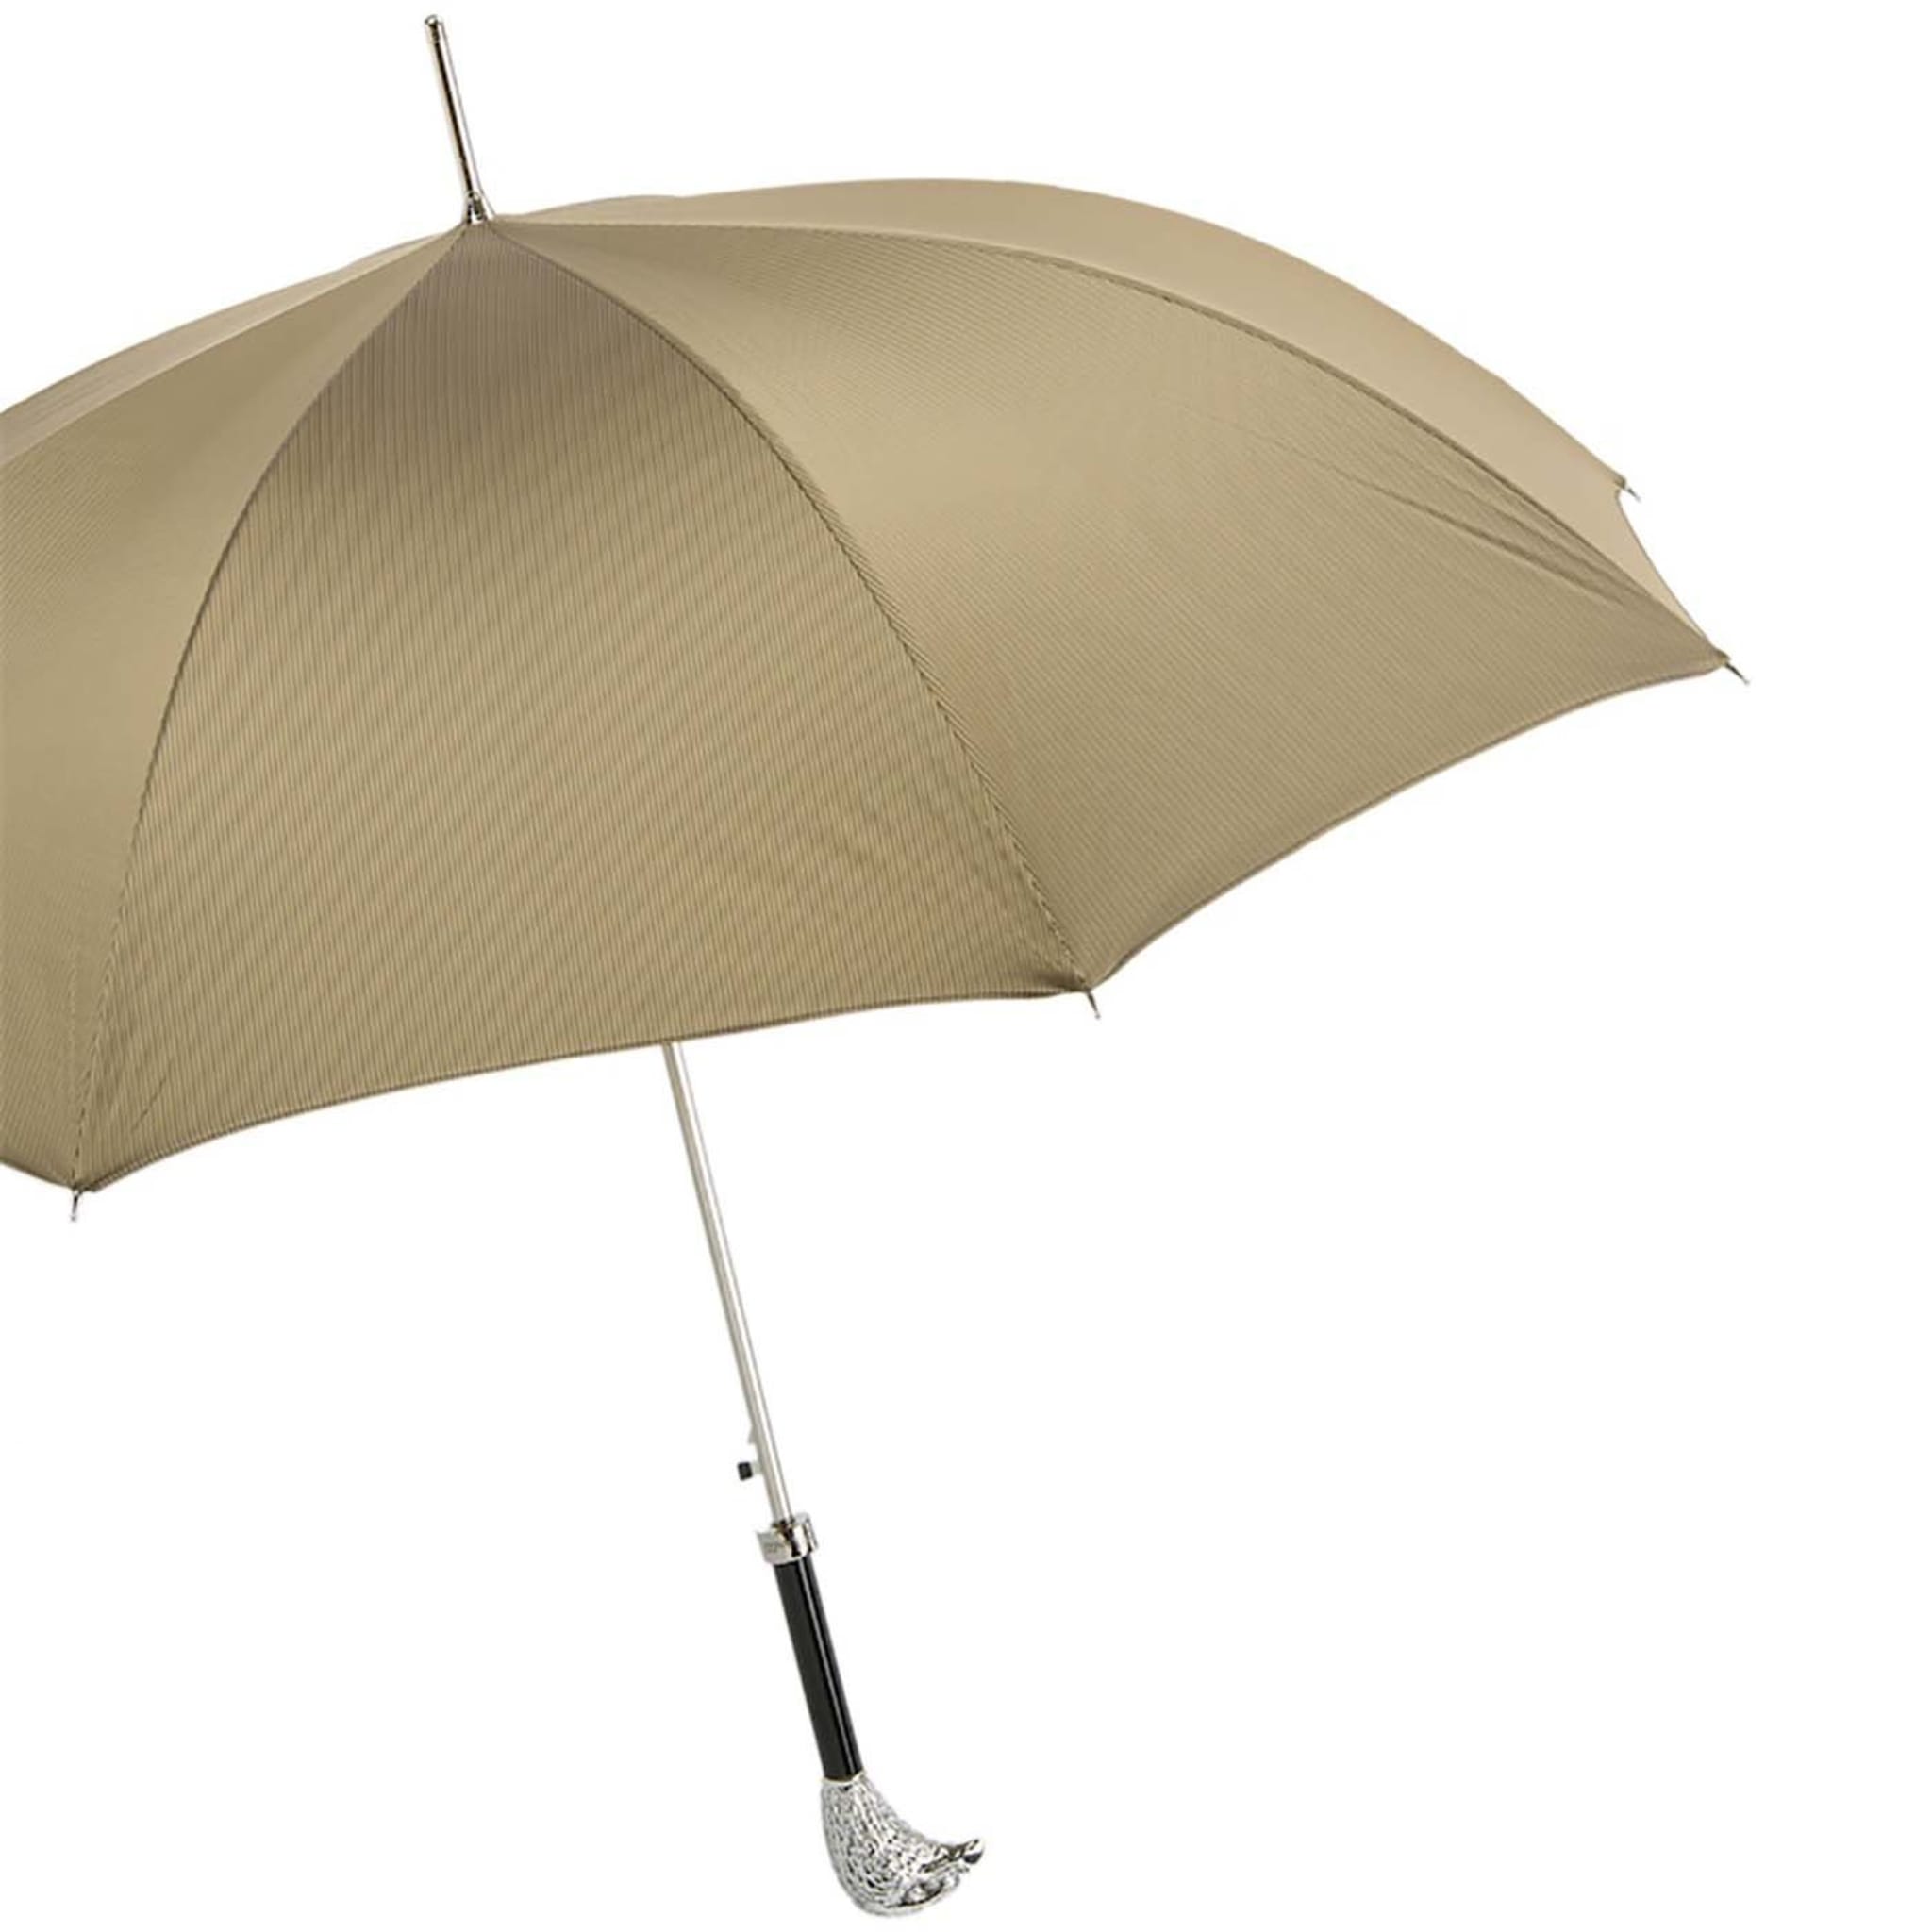 Beige Umbrella with Silver Eagle Handle - Alternative view 5